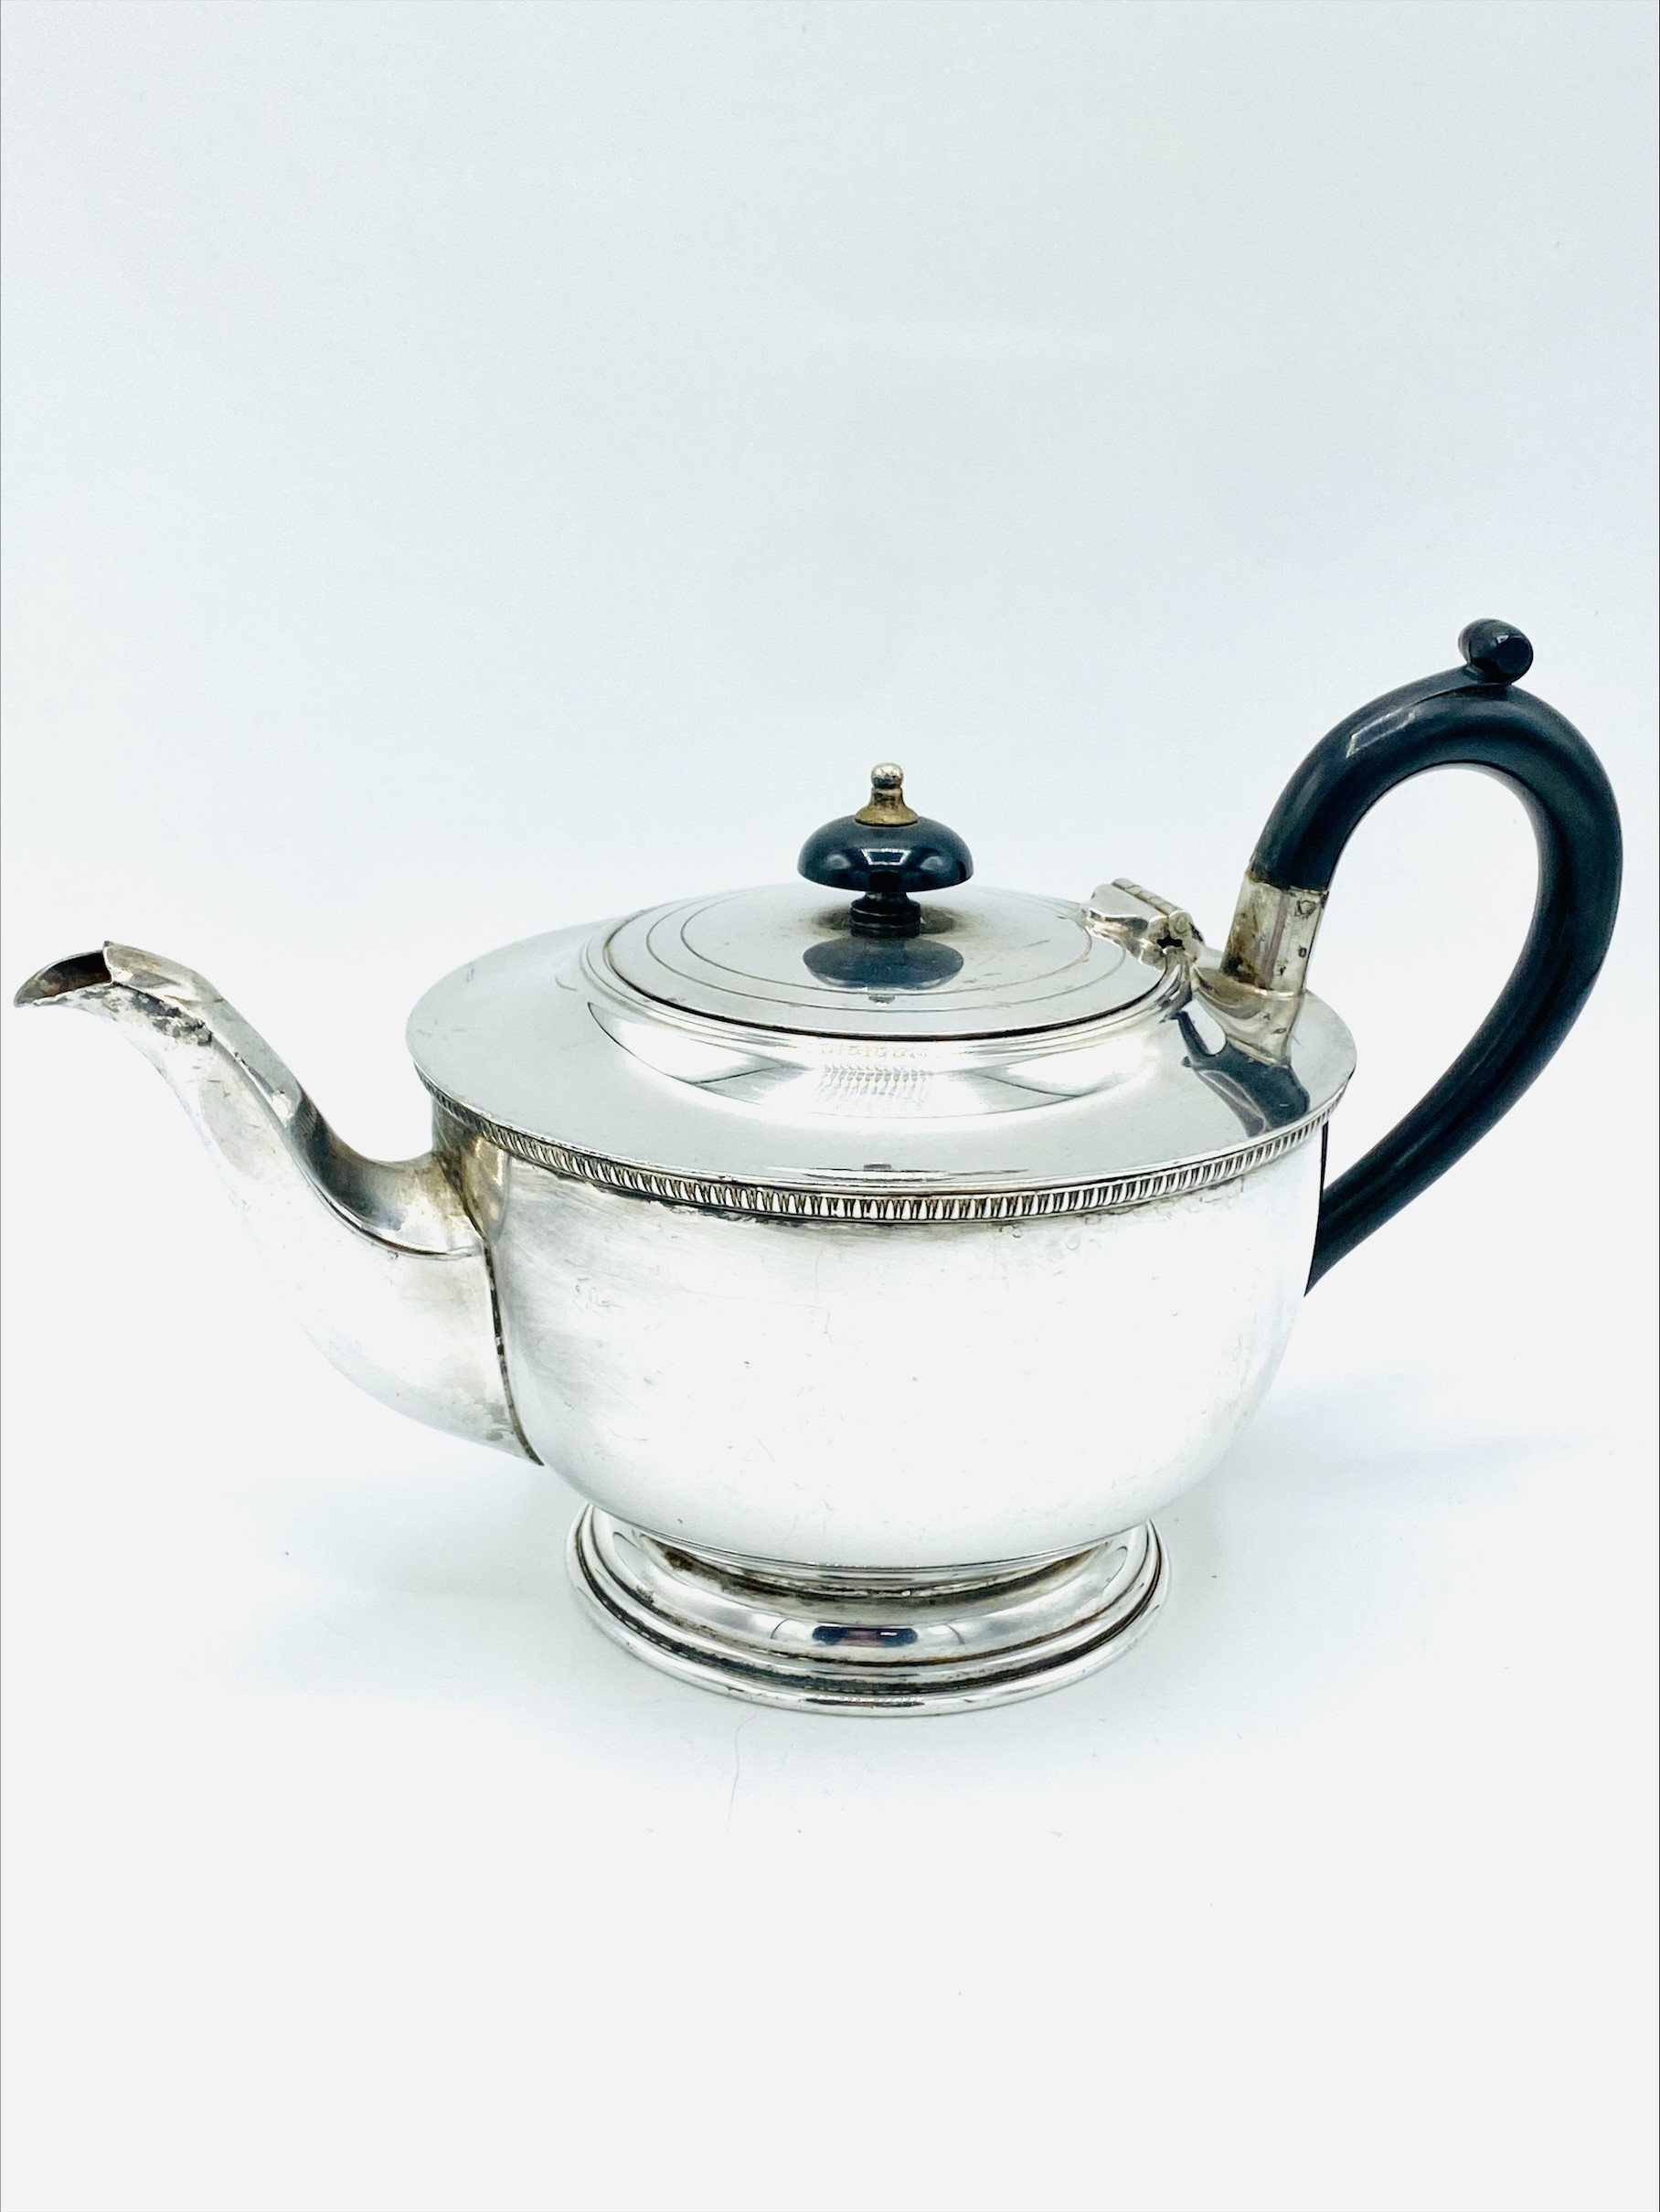 Garrard & Co silver plate part tea service - Image 8 of 11